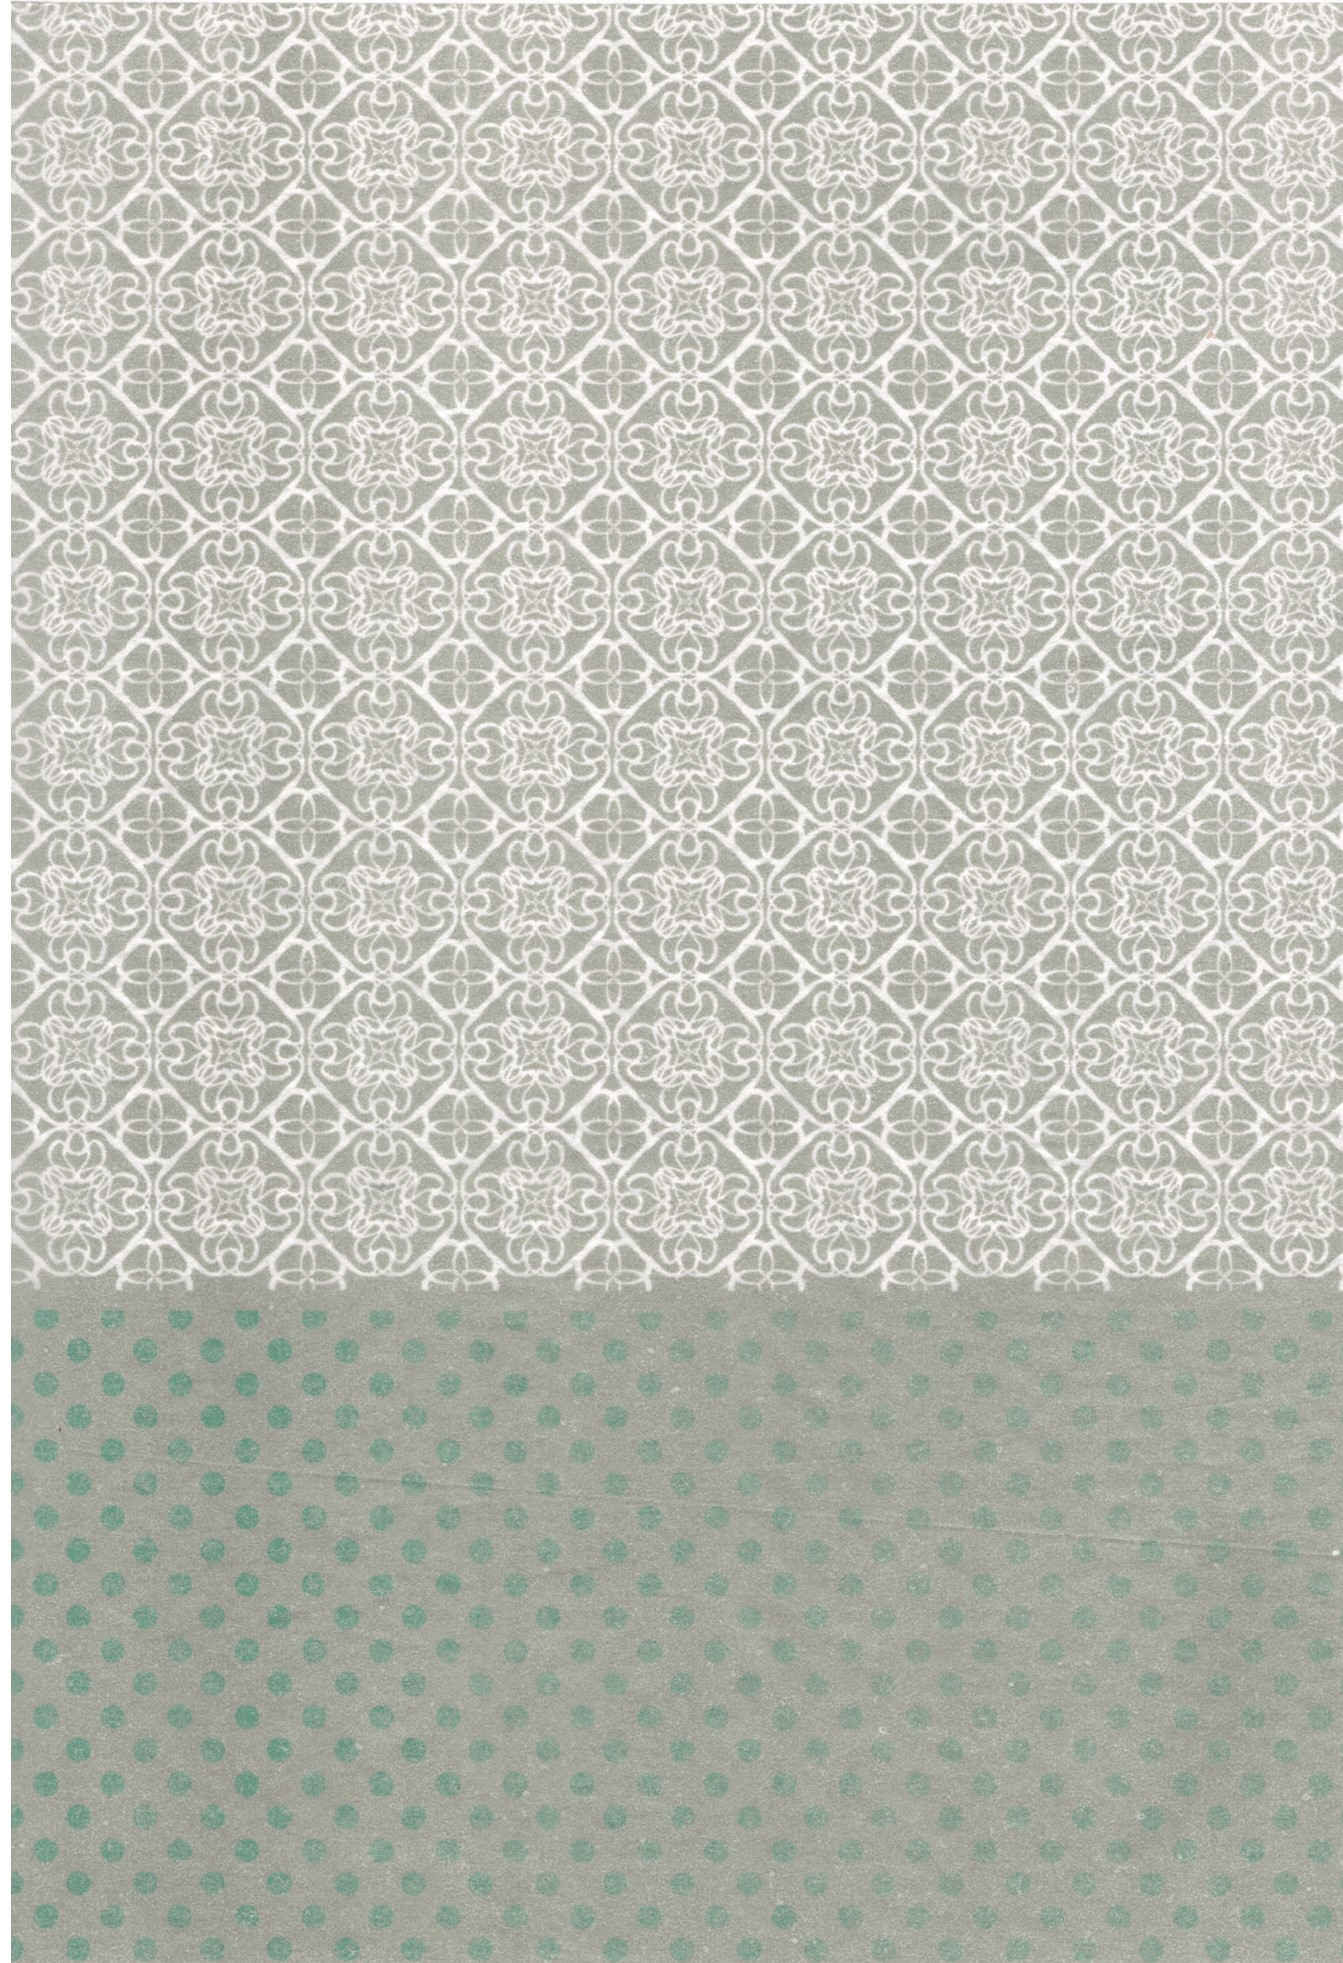 Découpage-Papier, 25x35 cm, 17 g, Muster grau mit grünen Pünktchen, 1 Blatt